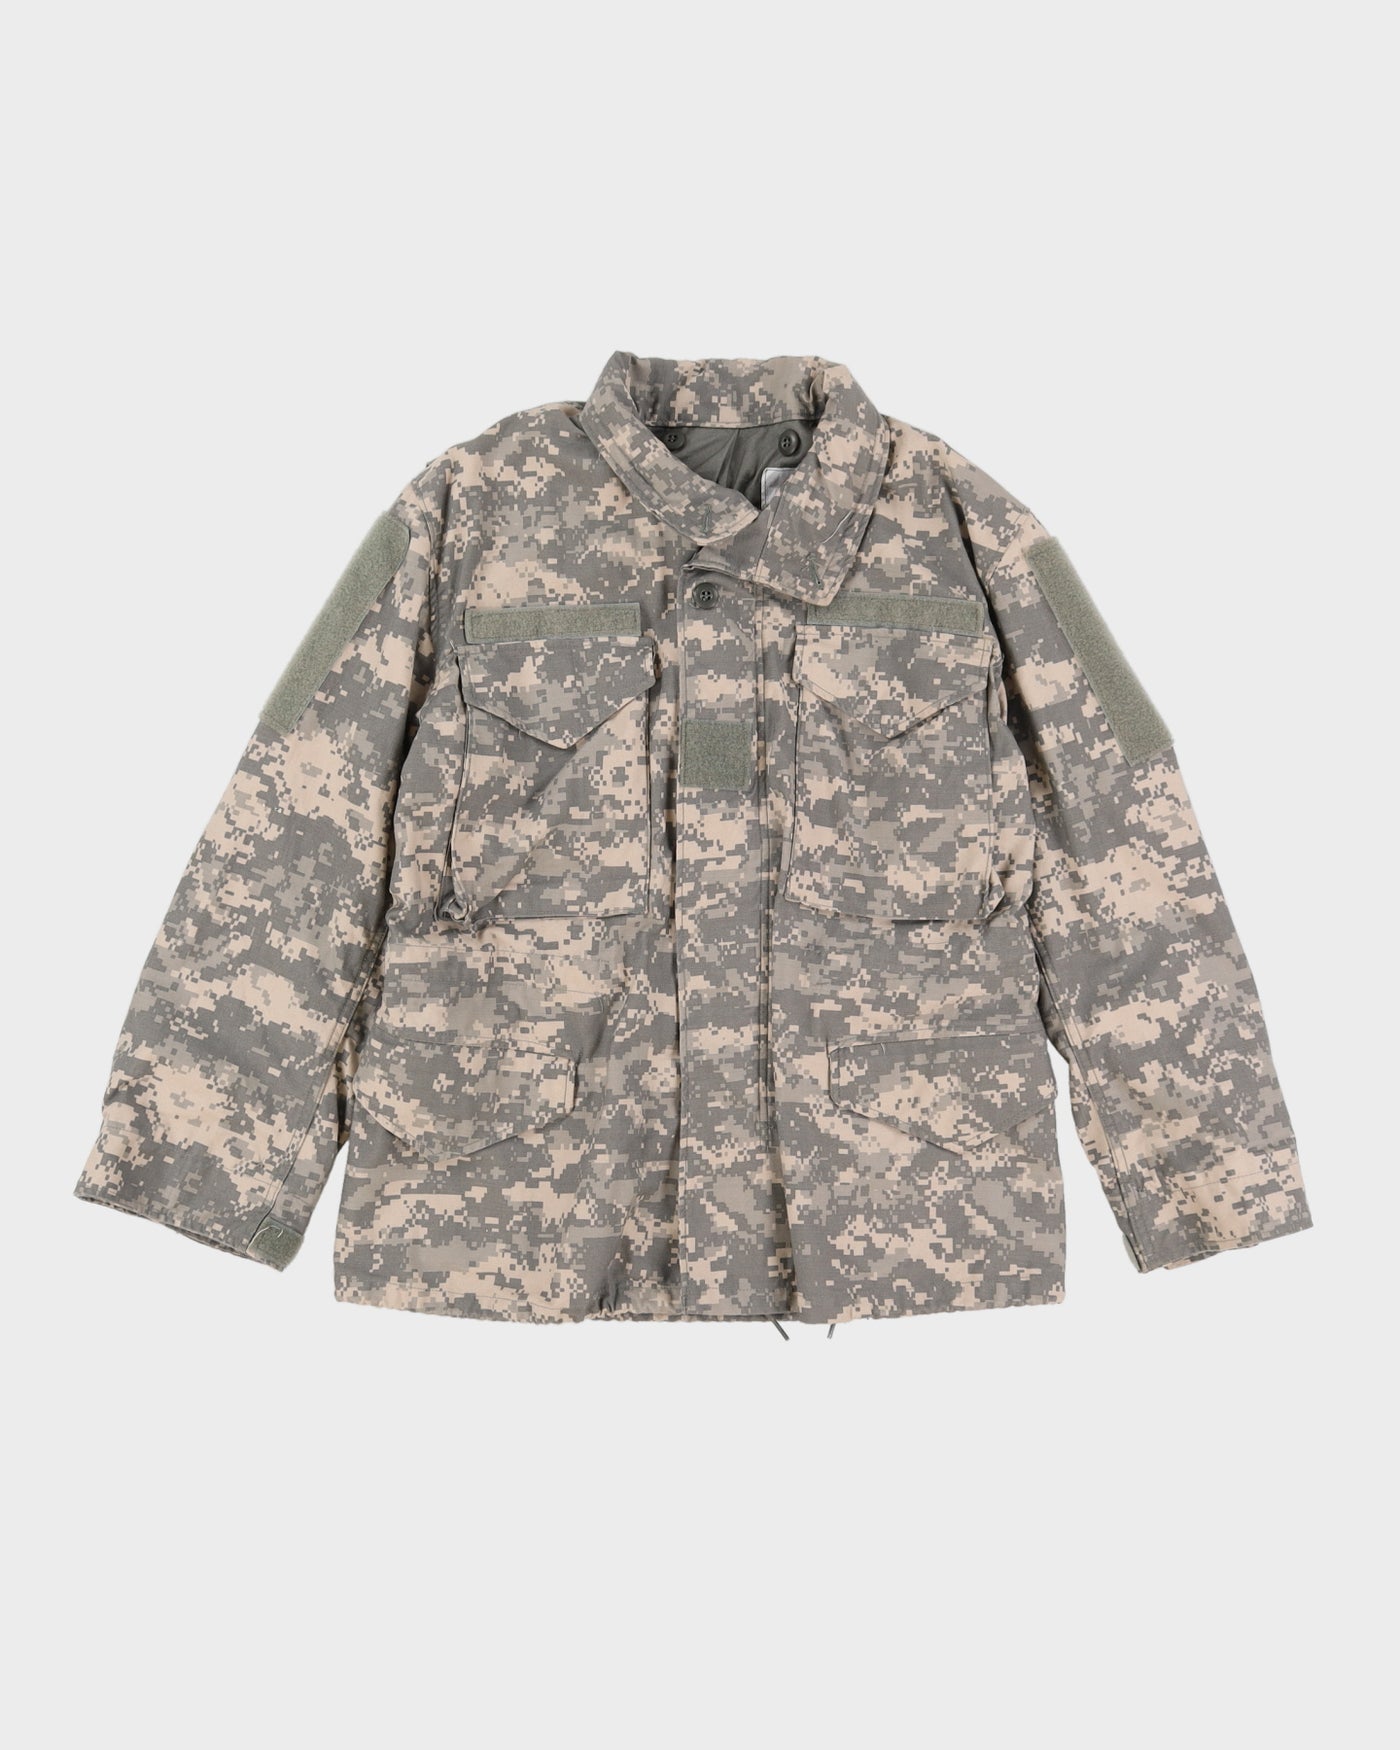 2006 US Army Digital OCP M65 Field Jacket - Medium